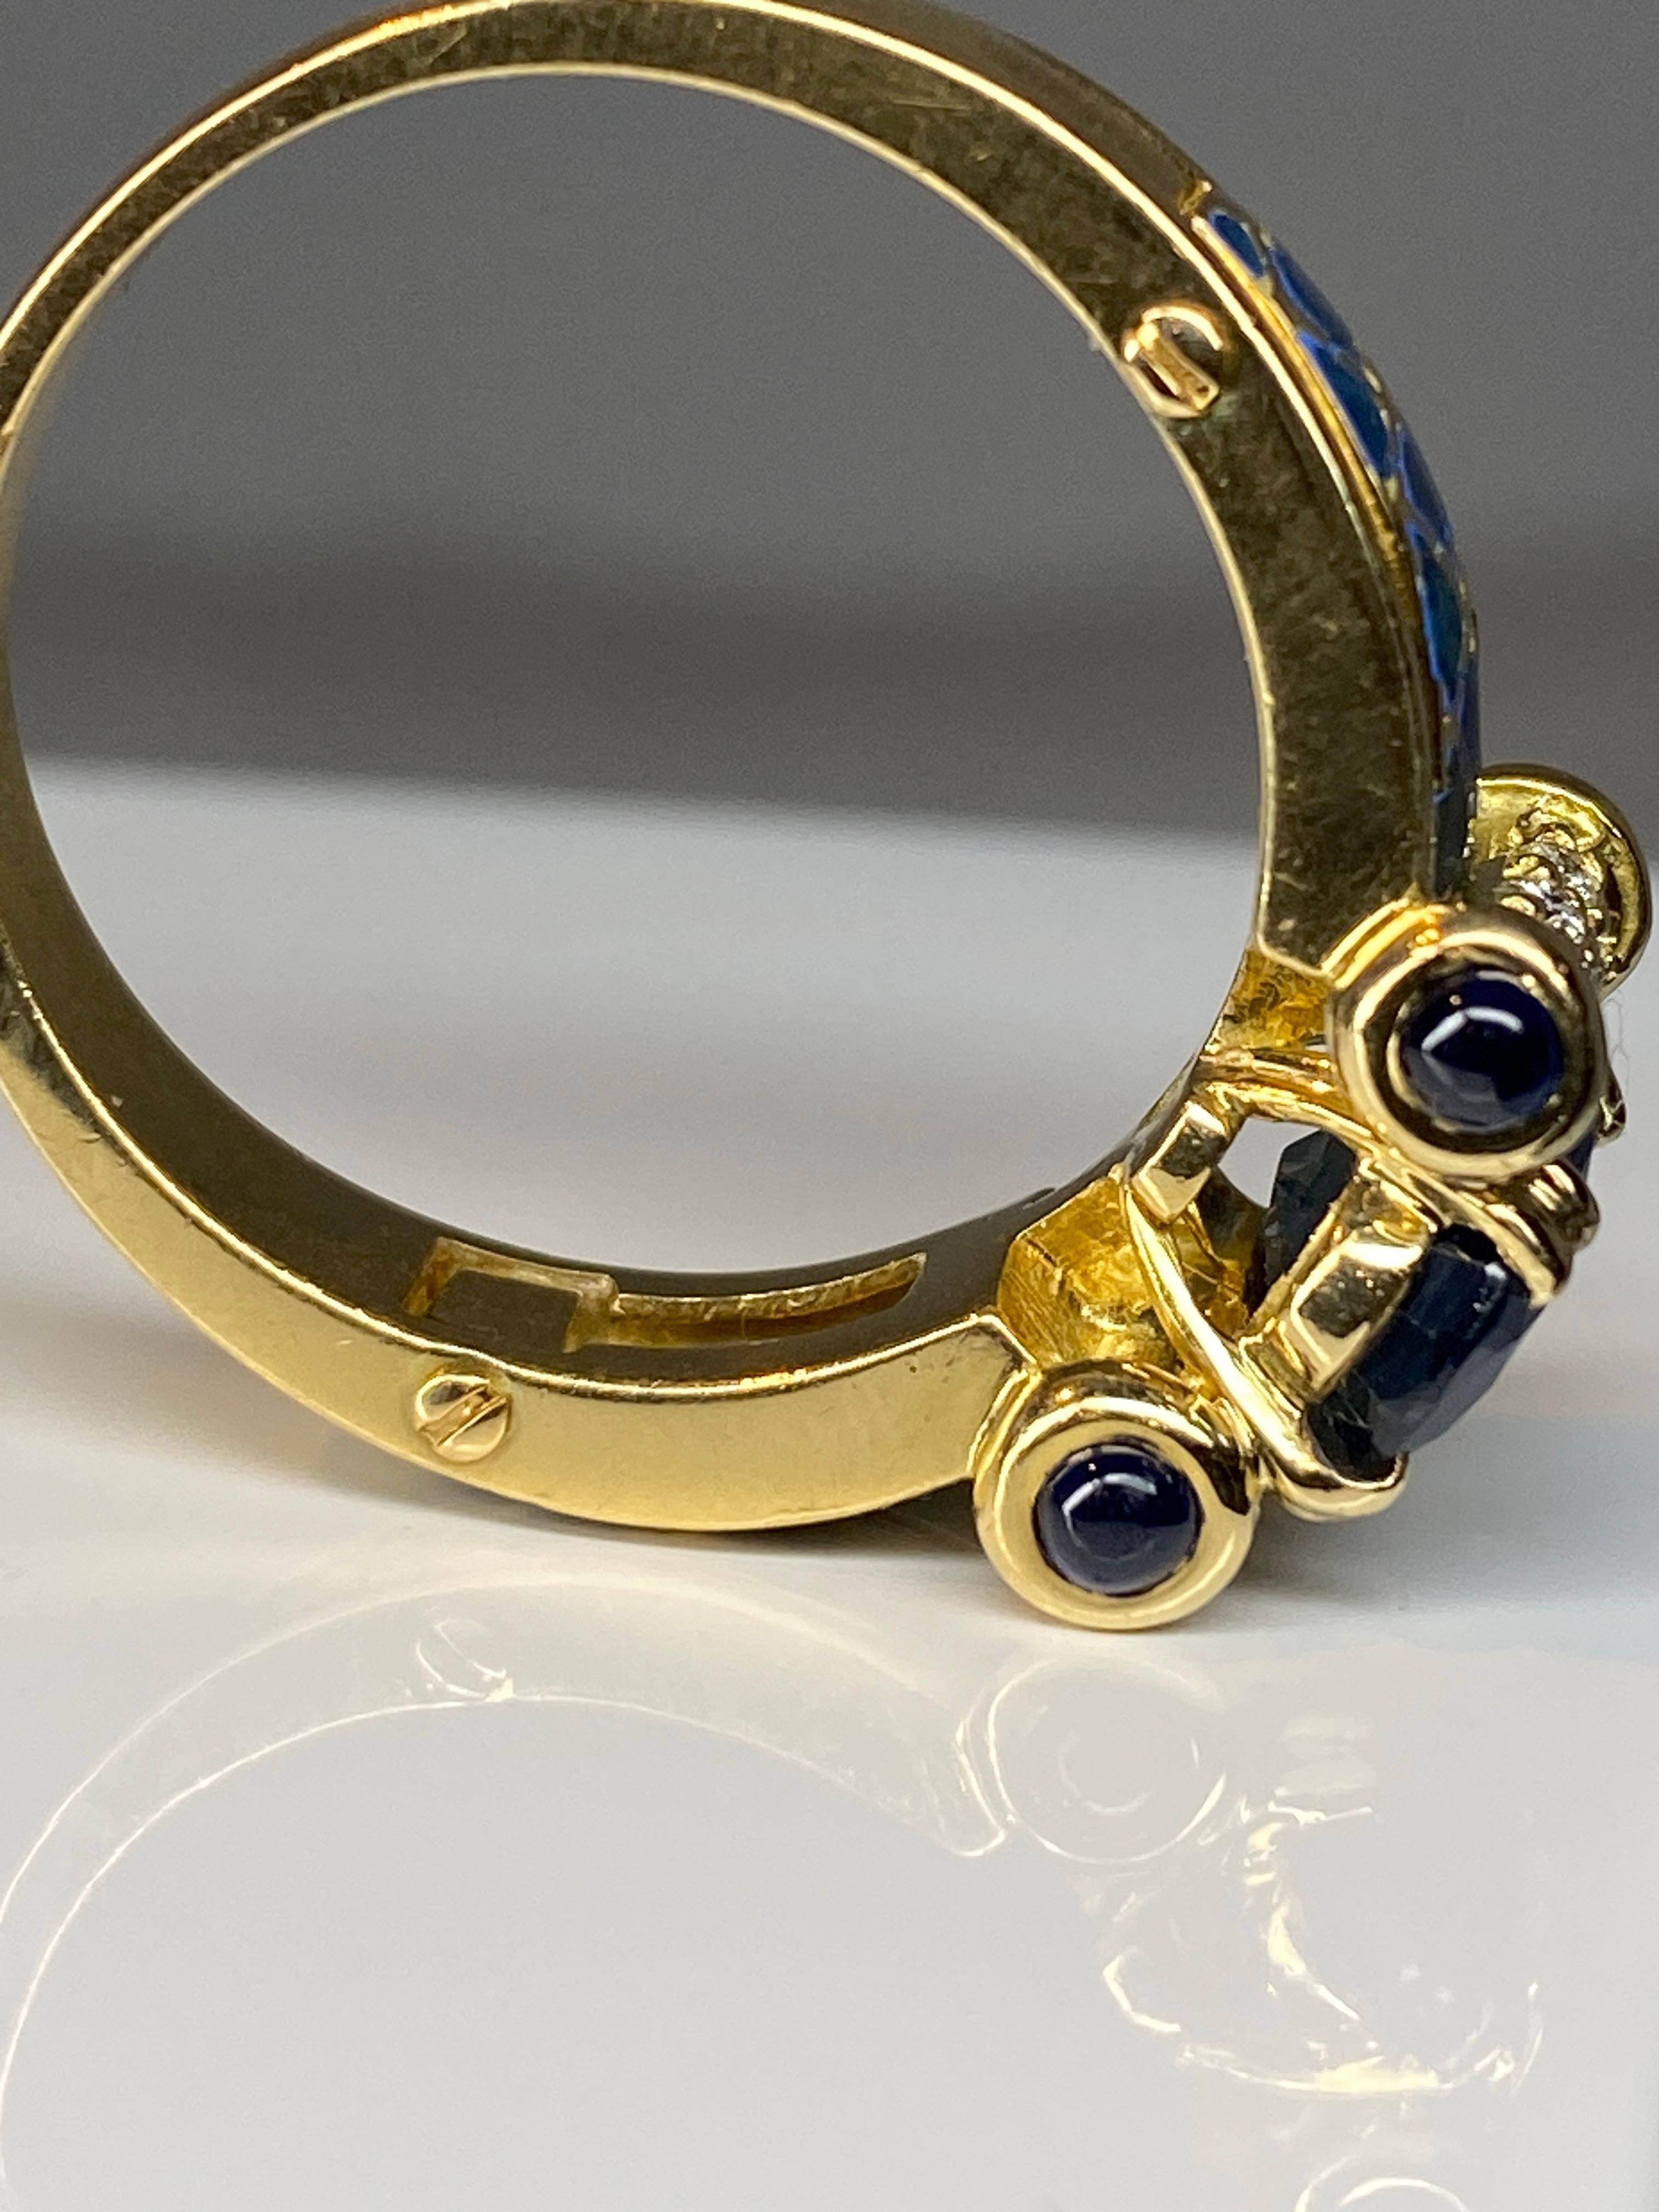 Korloff Ring in 18 Carat Gold: Sapphires, Diamonds, Blue Enamel For Sale 2